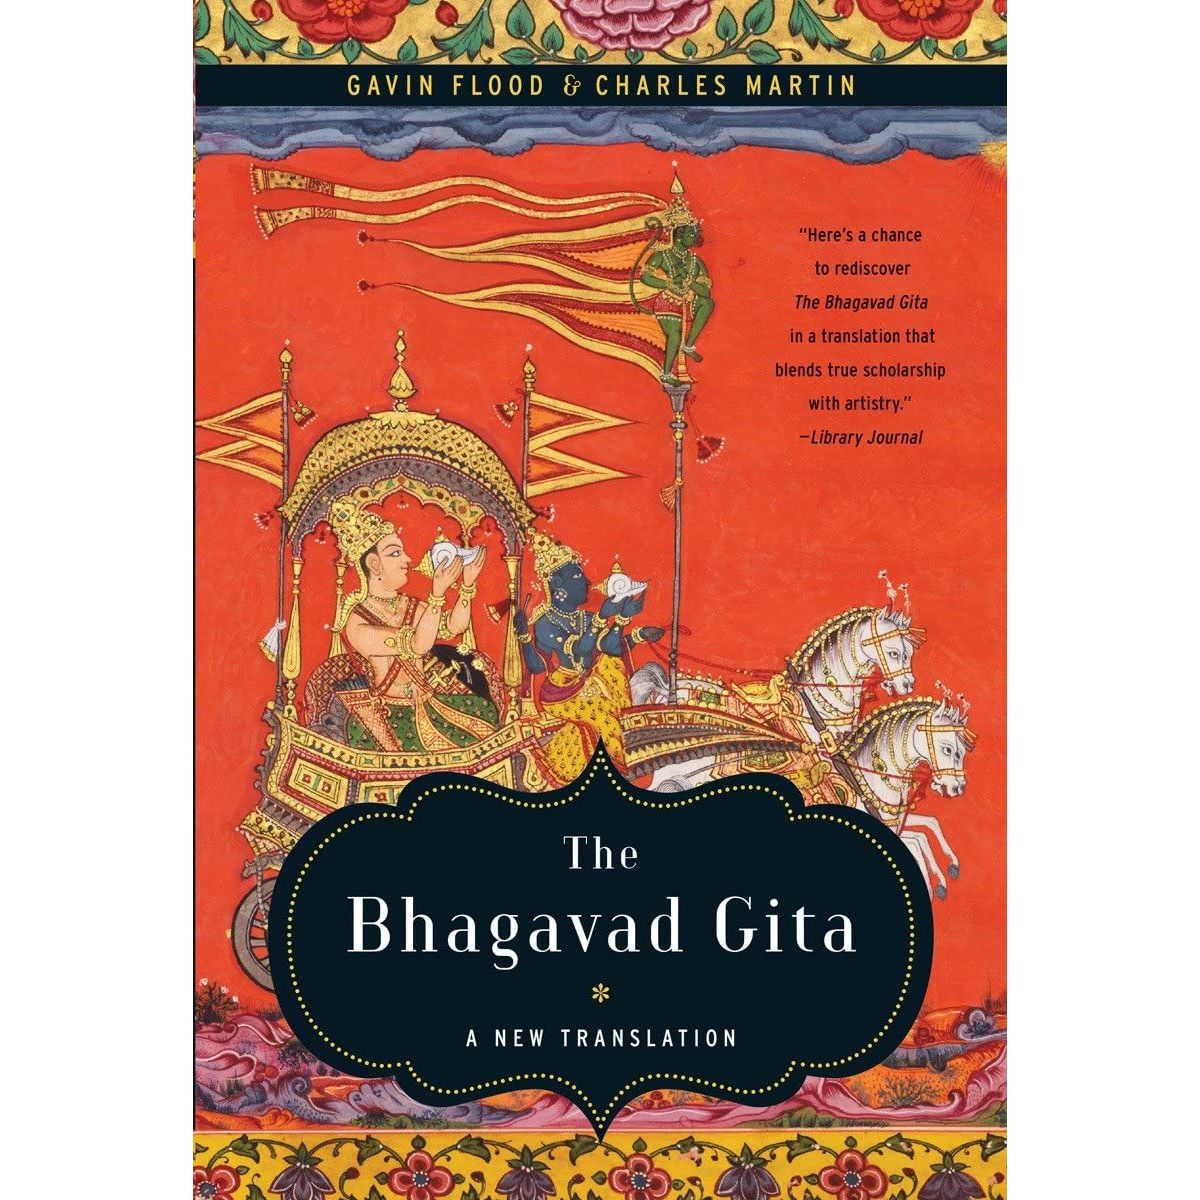 The Bhagavad Gita ~ A New Translation